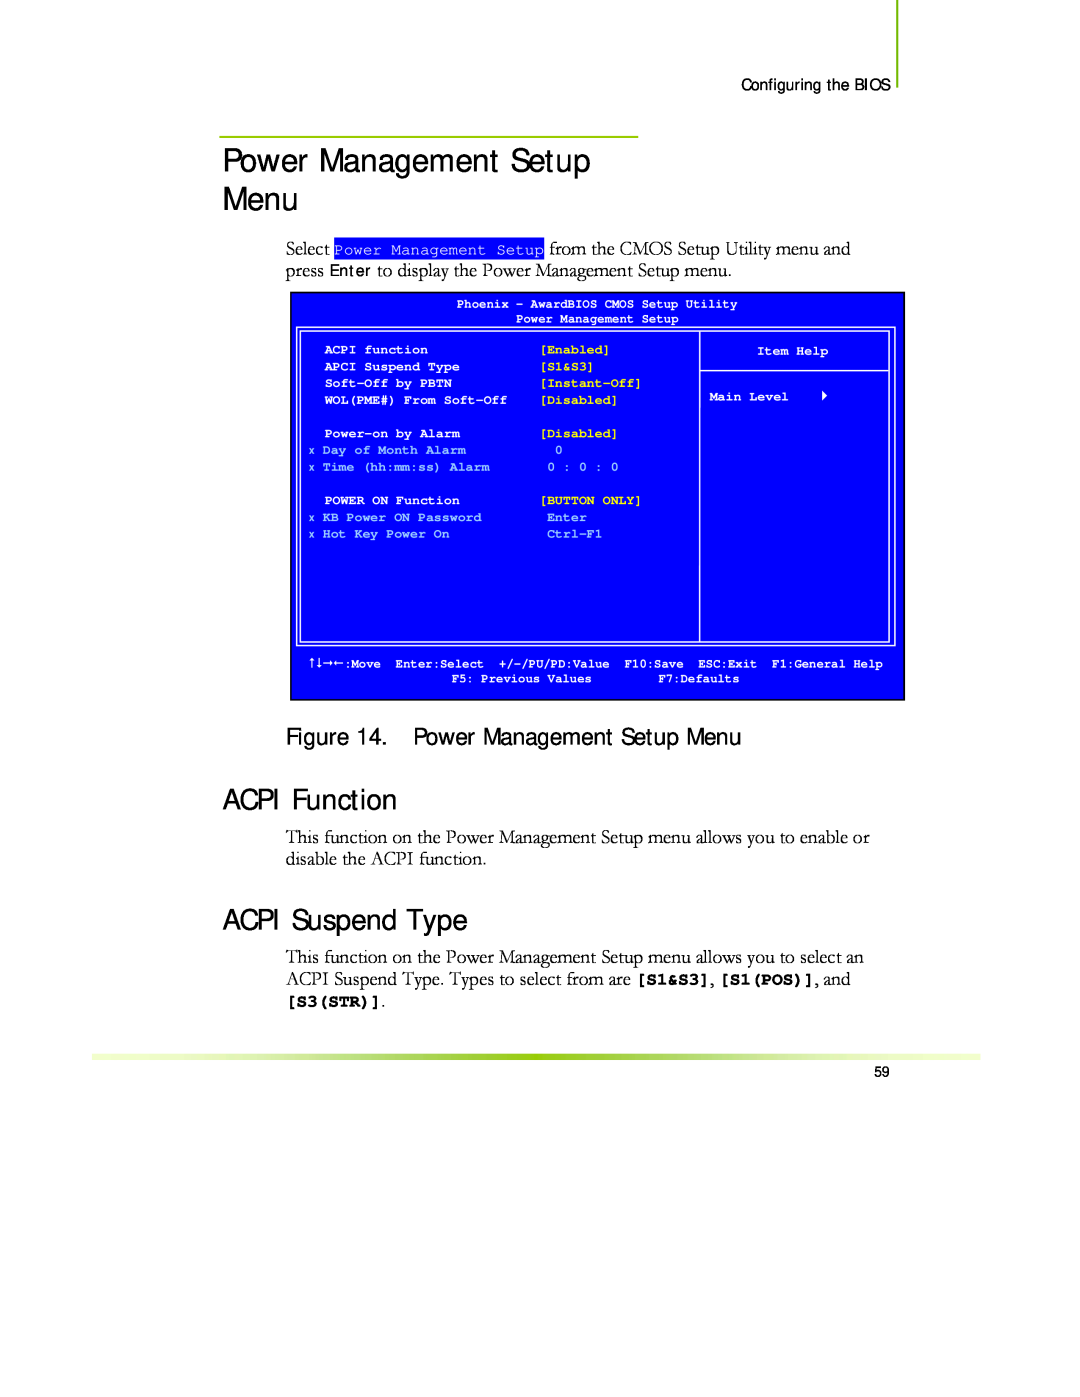 EVGA 122-CK-NF68-XX manual Power Management Setup Menu, ACPI Function, ACPI Suspend Type 